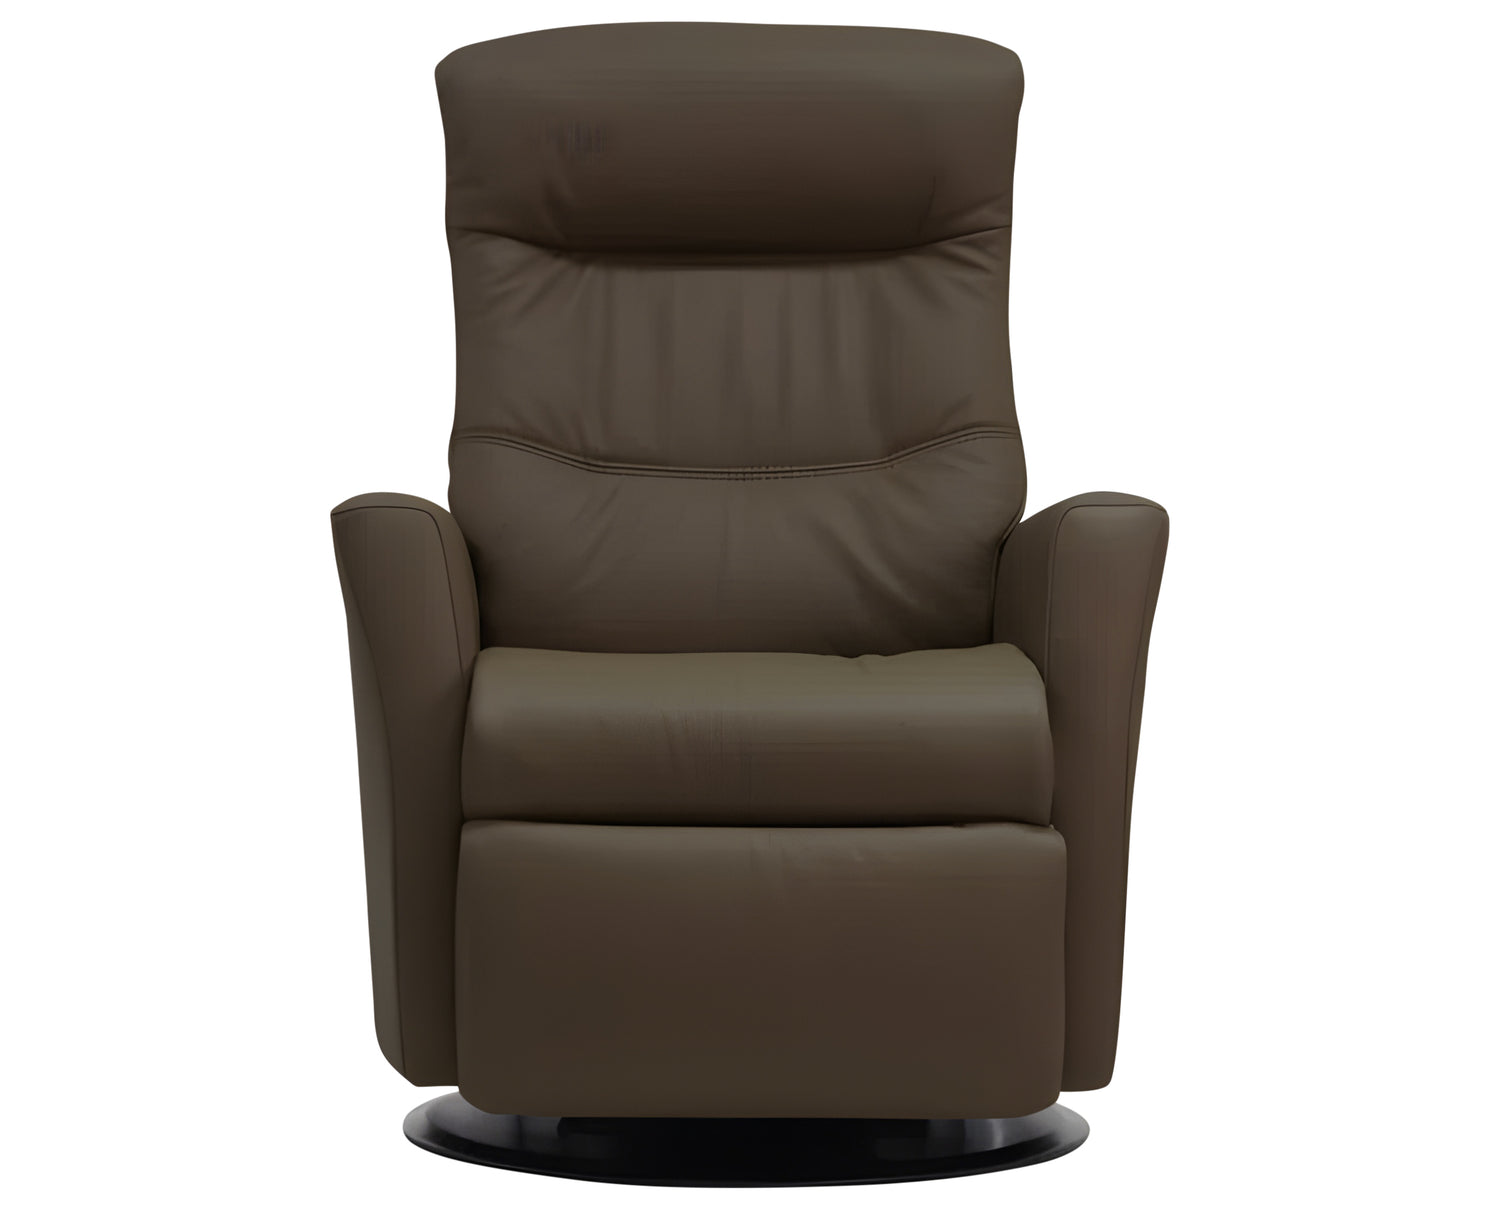 Trend Leather Smoke L | Norwegian Comfort Lord Recliner - Promo | Valley Ridge Furniture